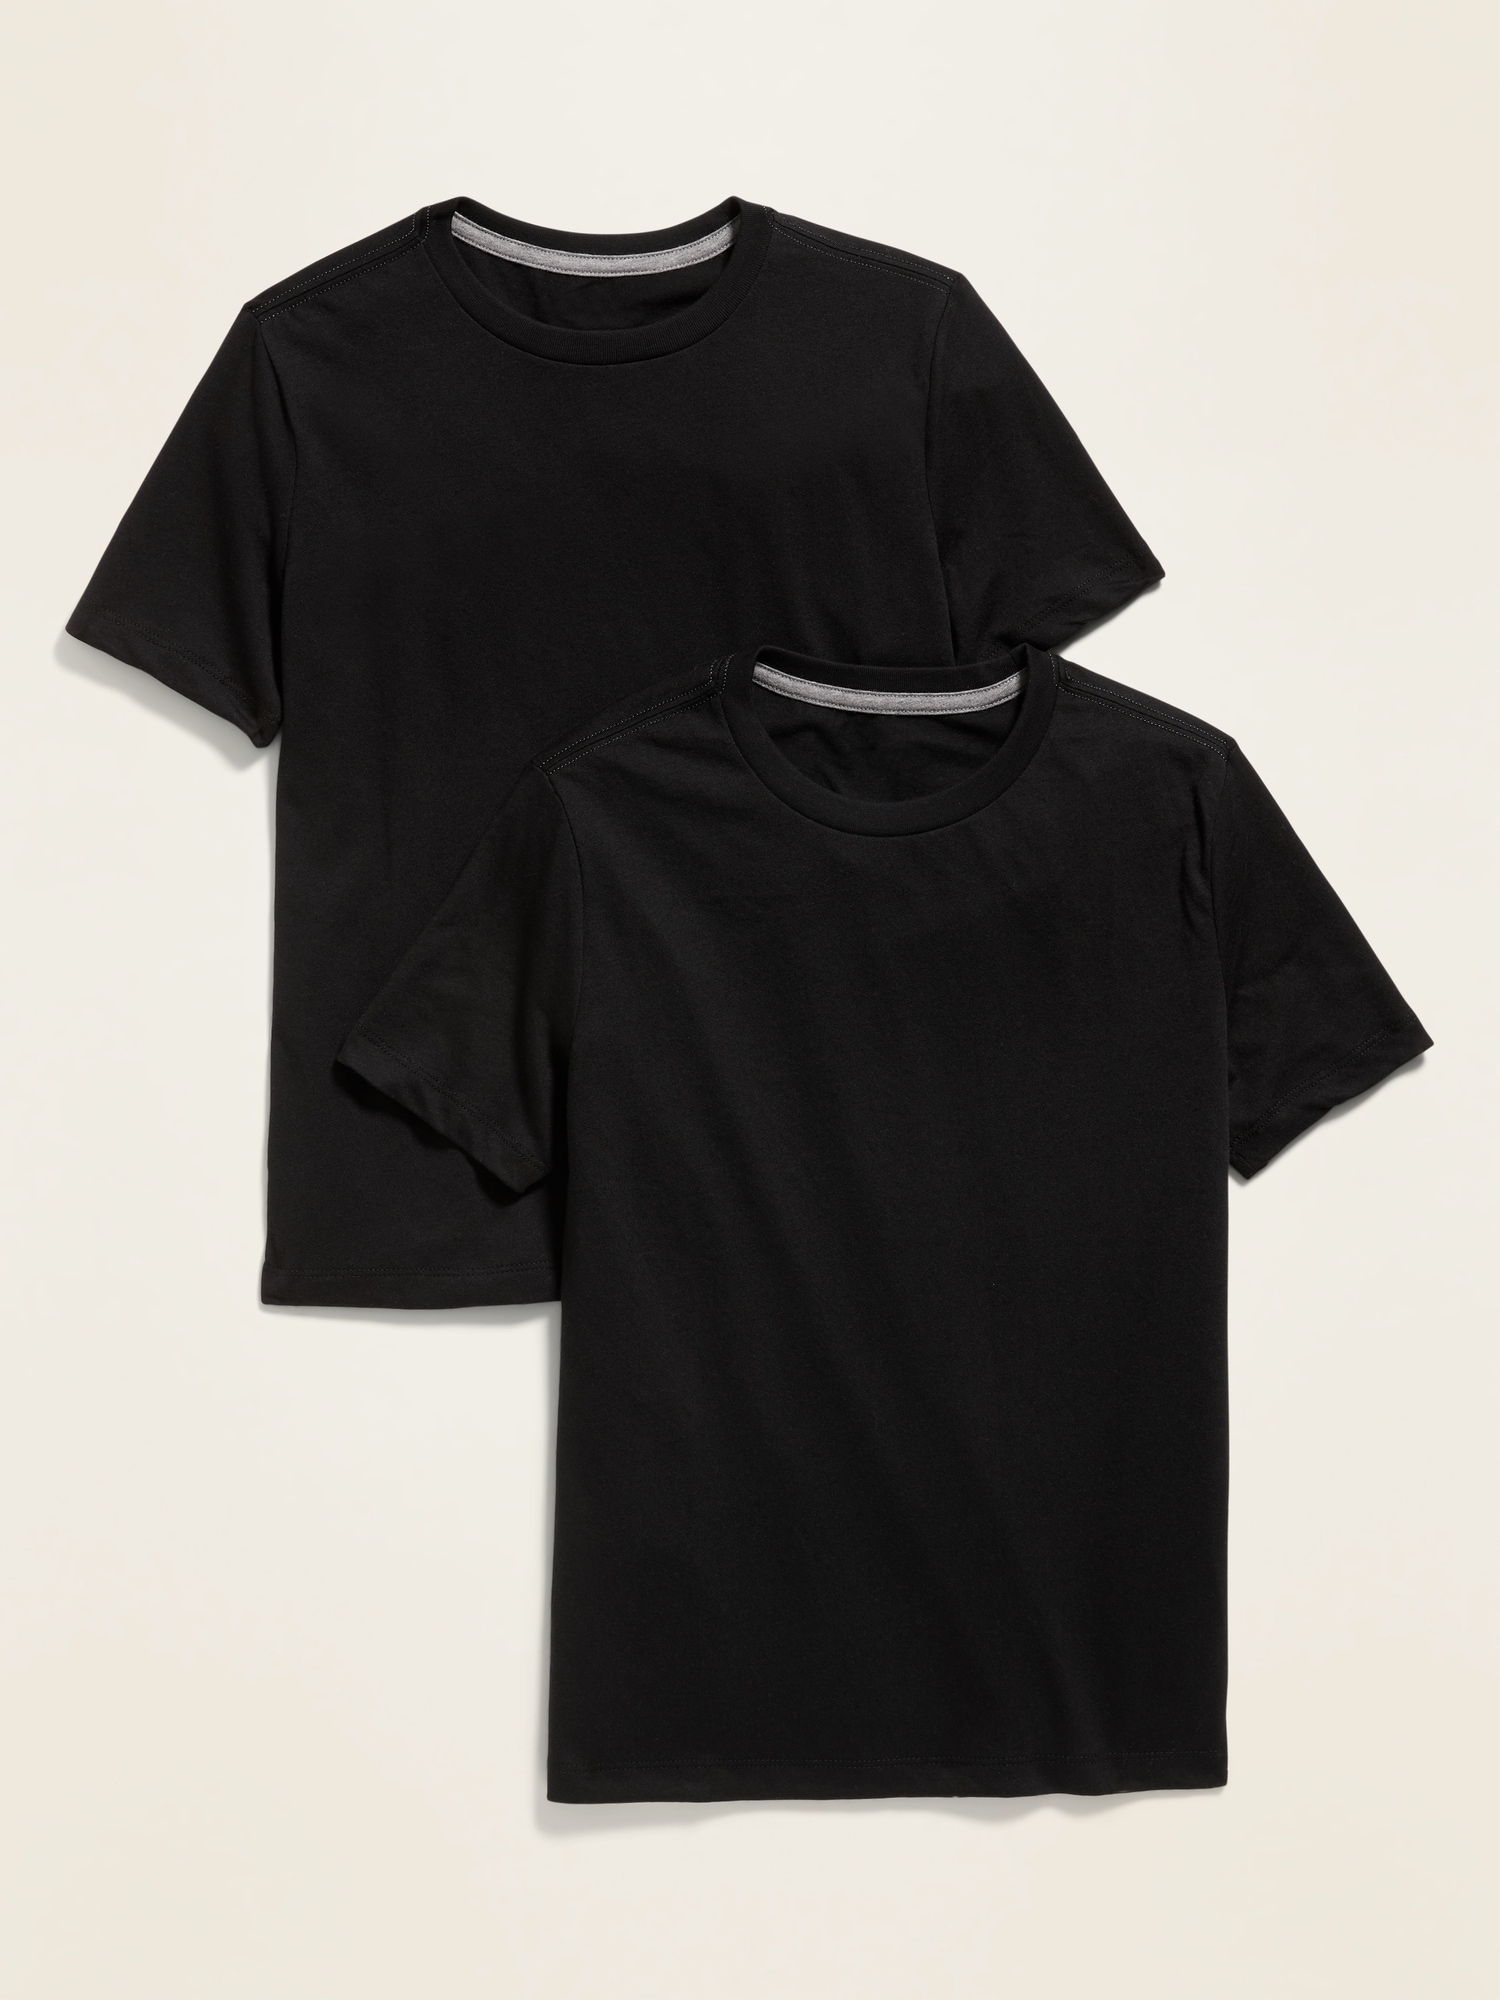 Old Navy Softest Crew-Neck T-Shirt 2-Pack For Boys black. 1